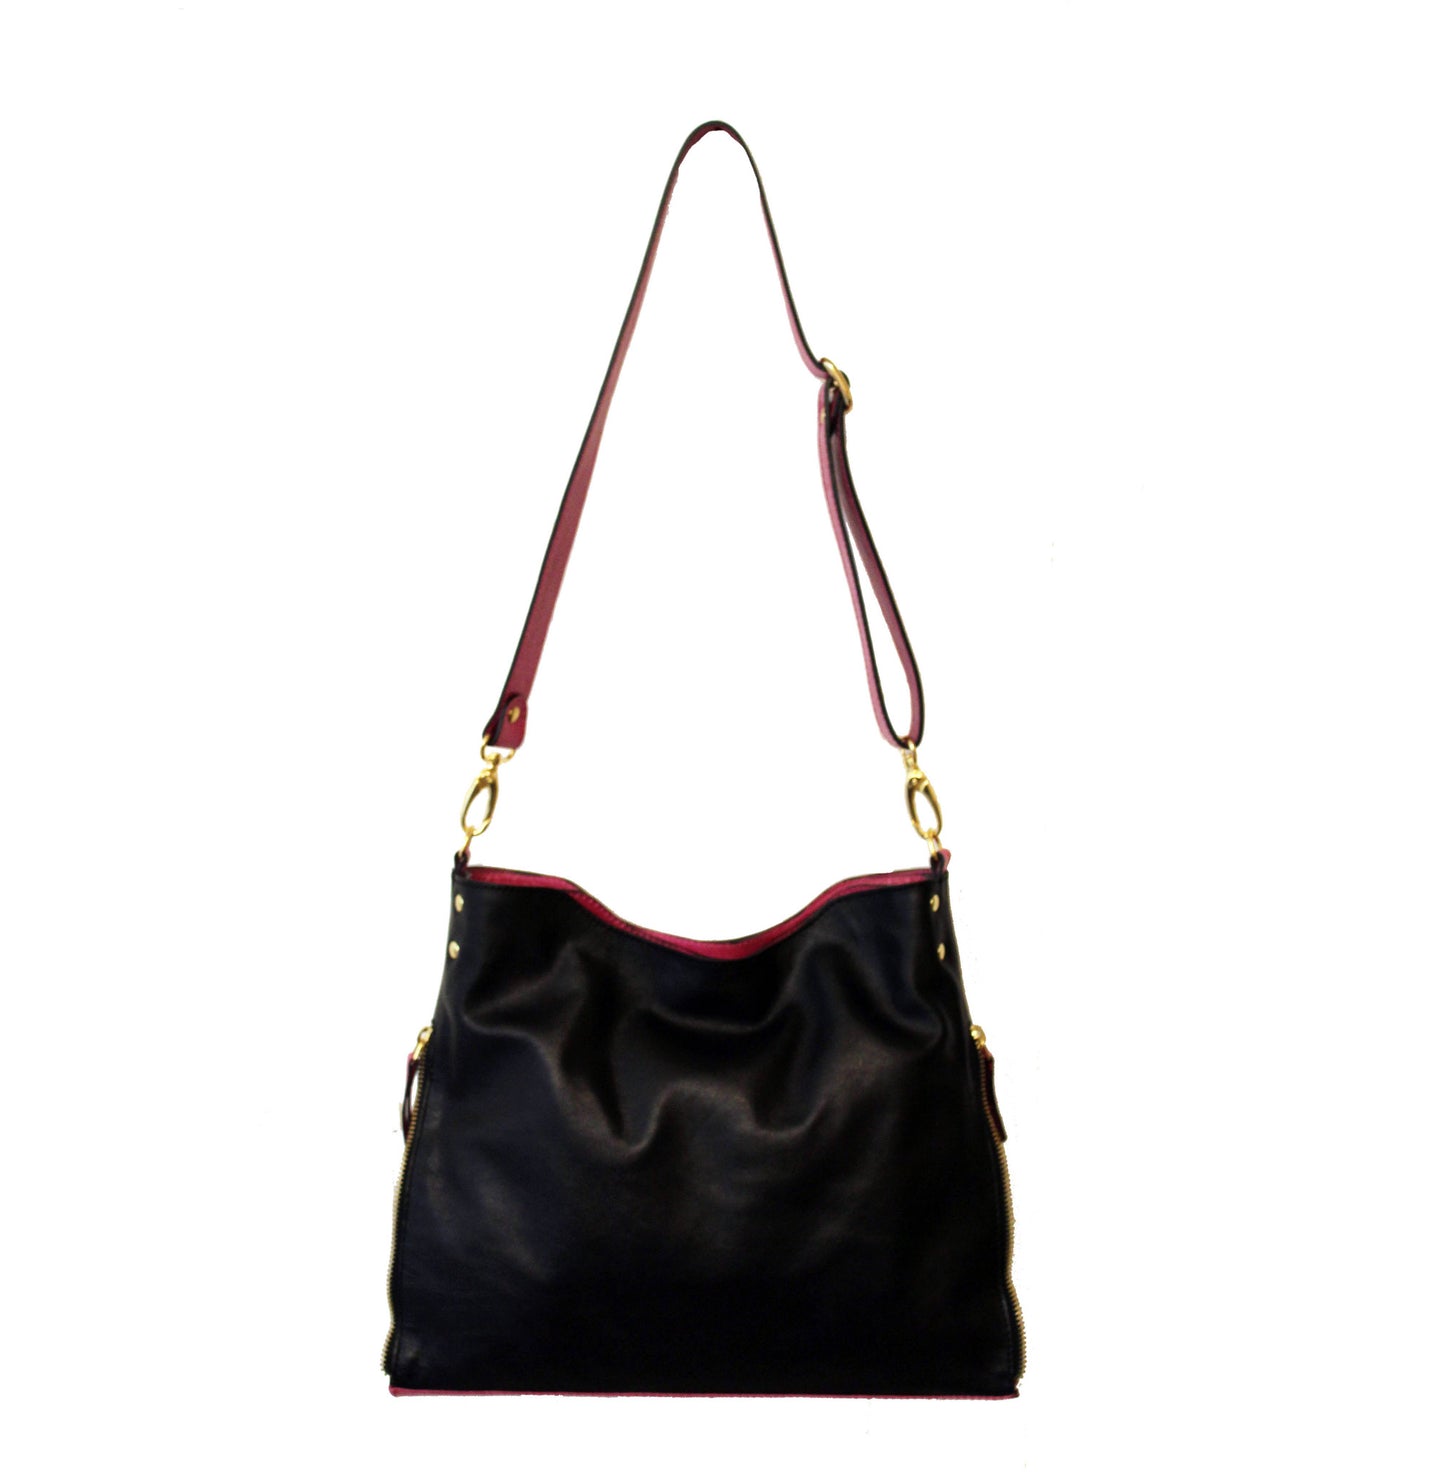 Riche - Black/Fuchsia black leather handbag